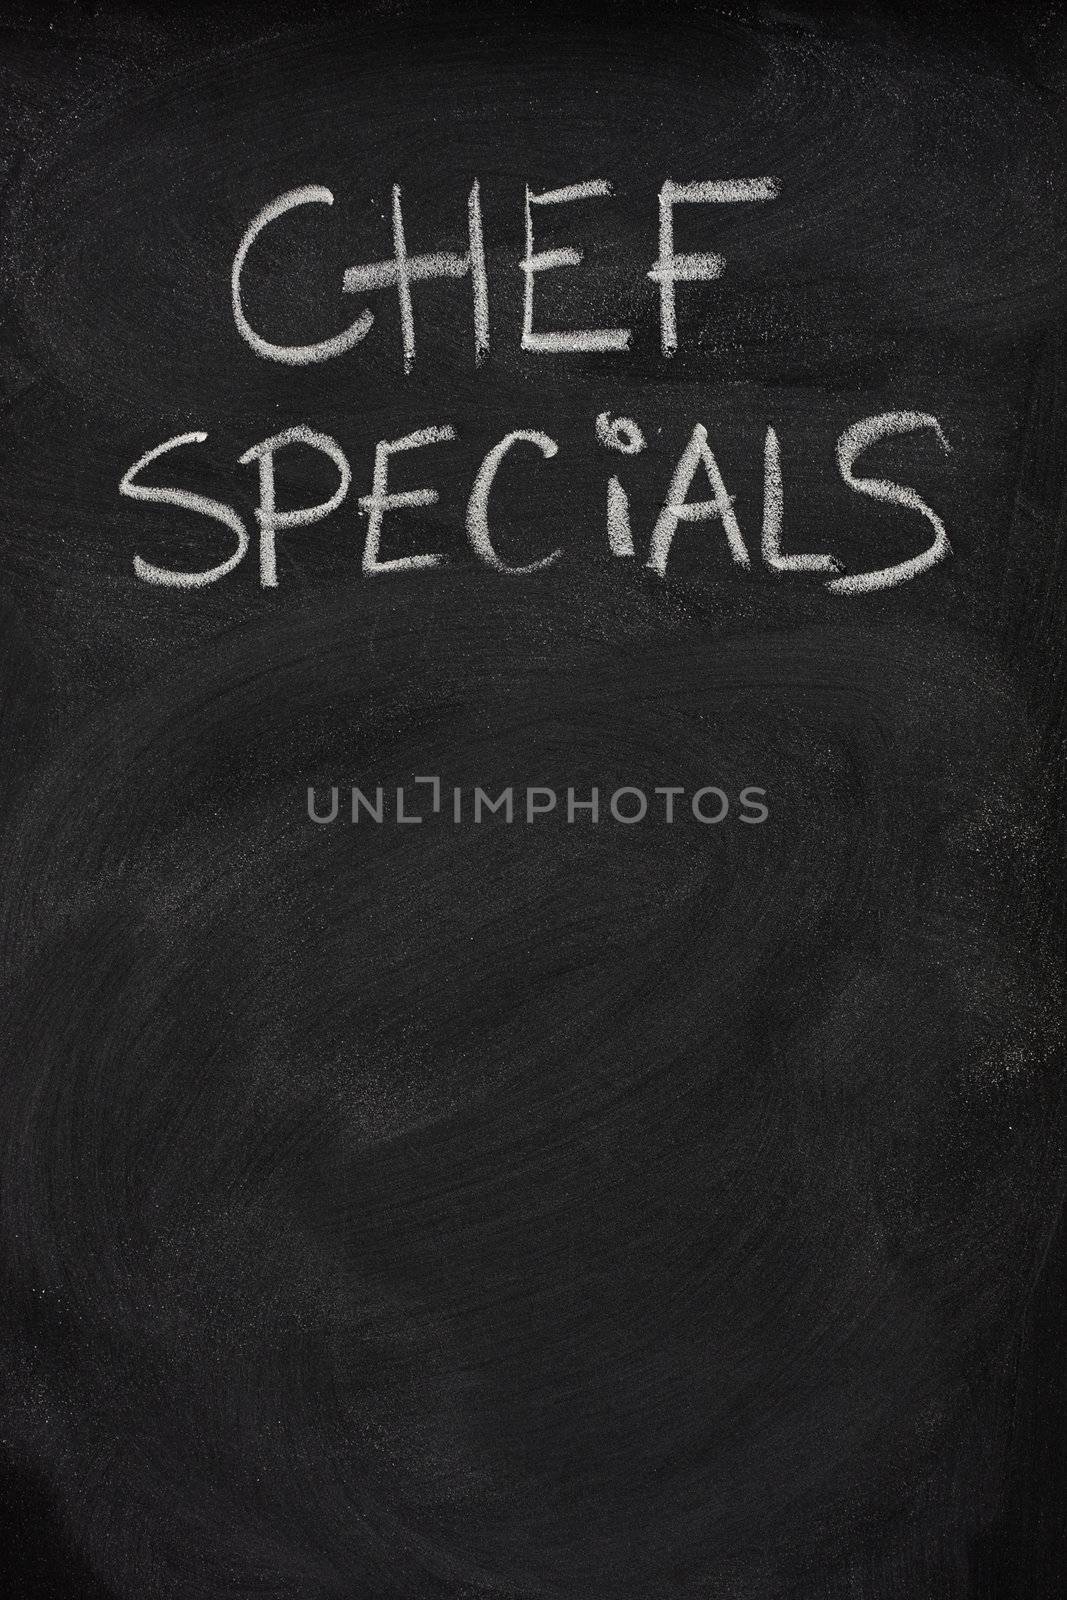 chef specials title on blackboard by PixelsAway